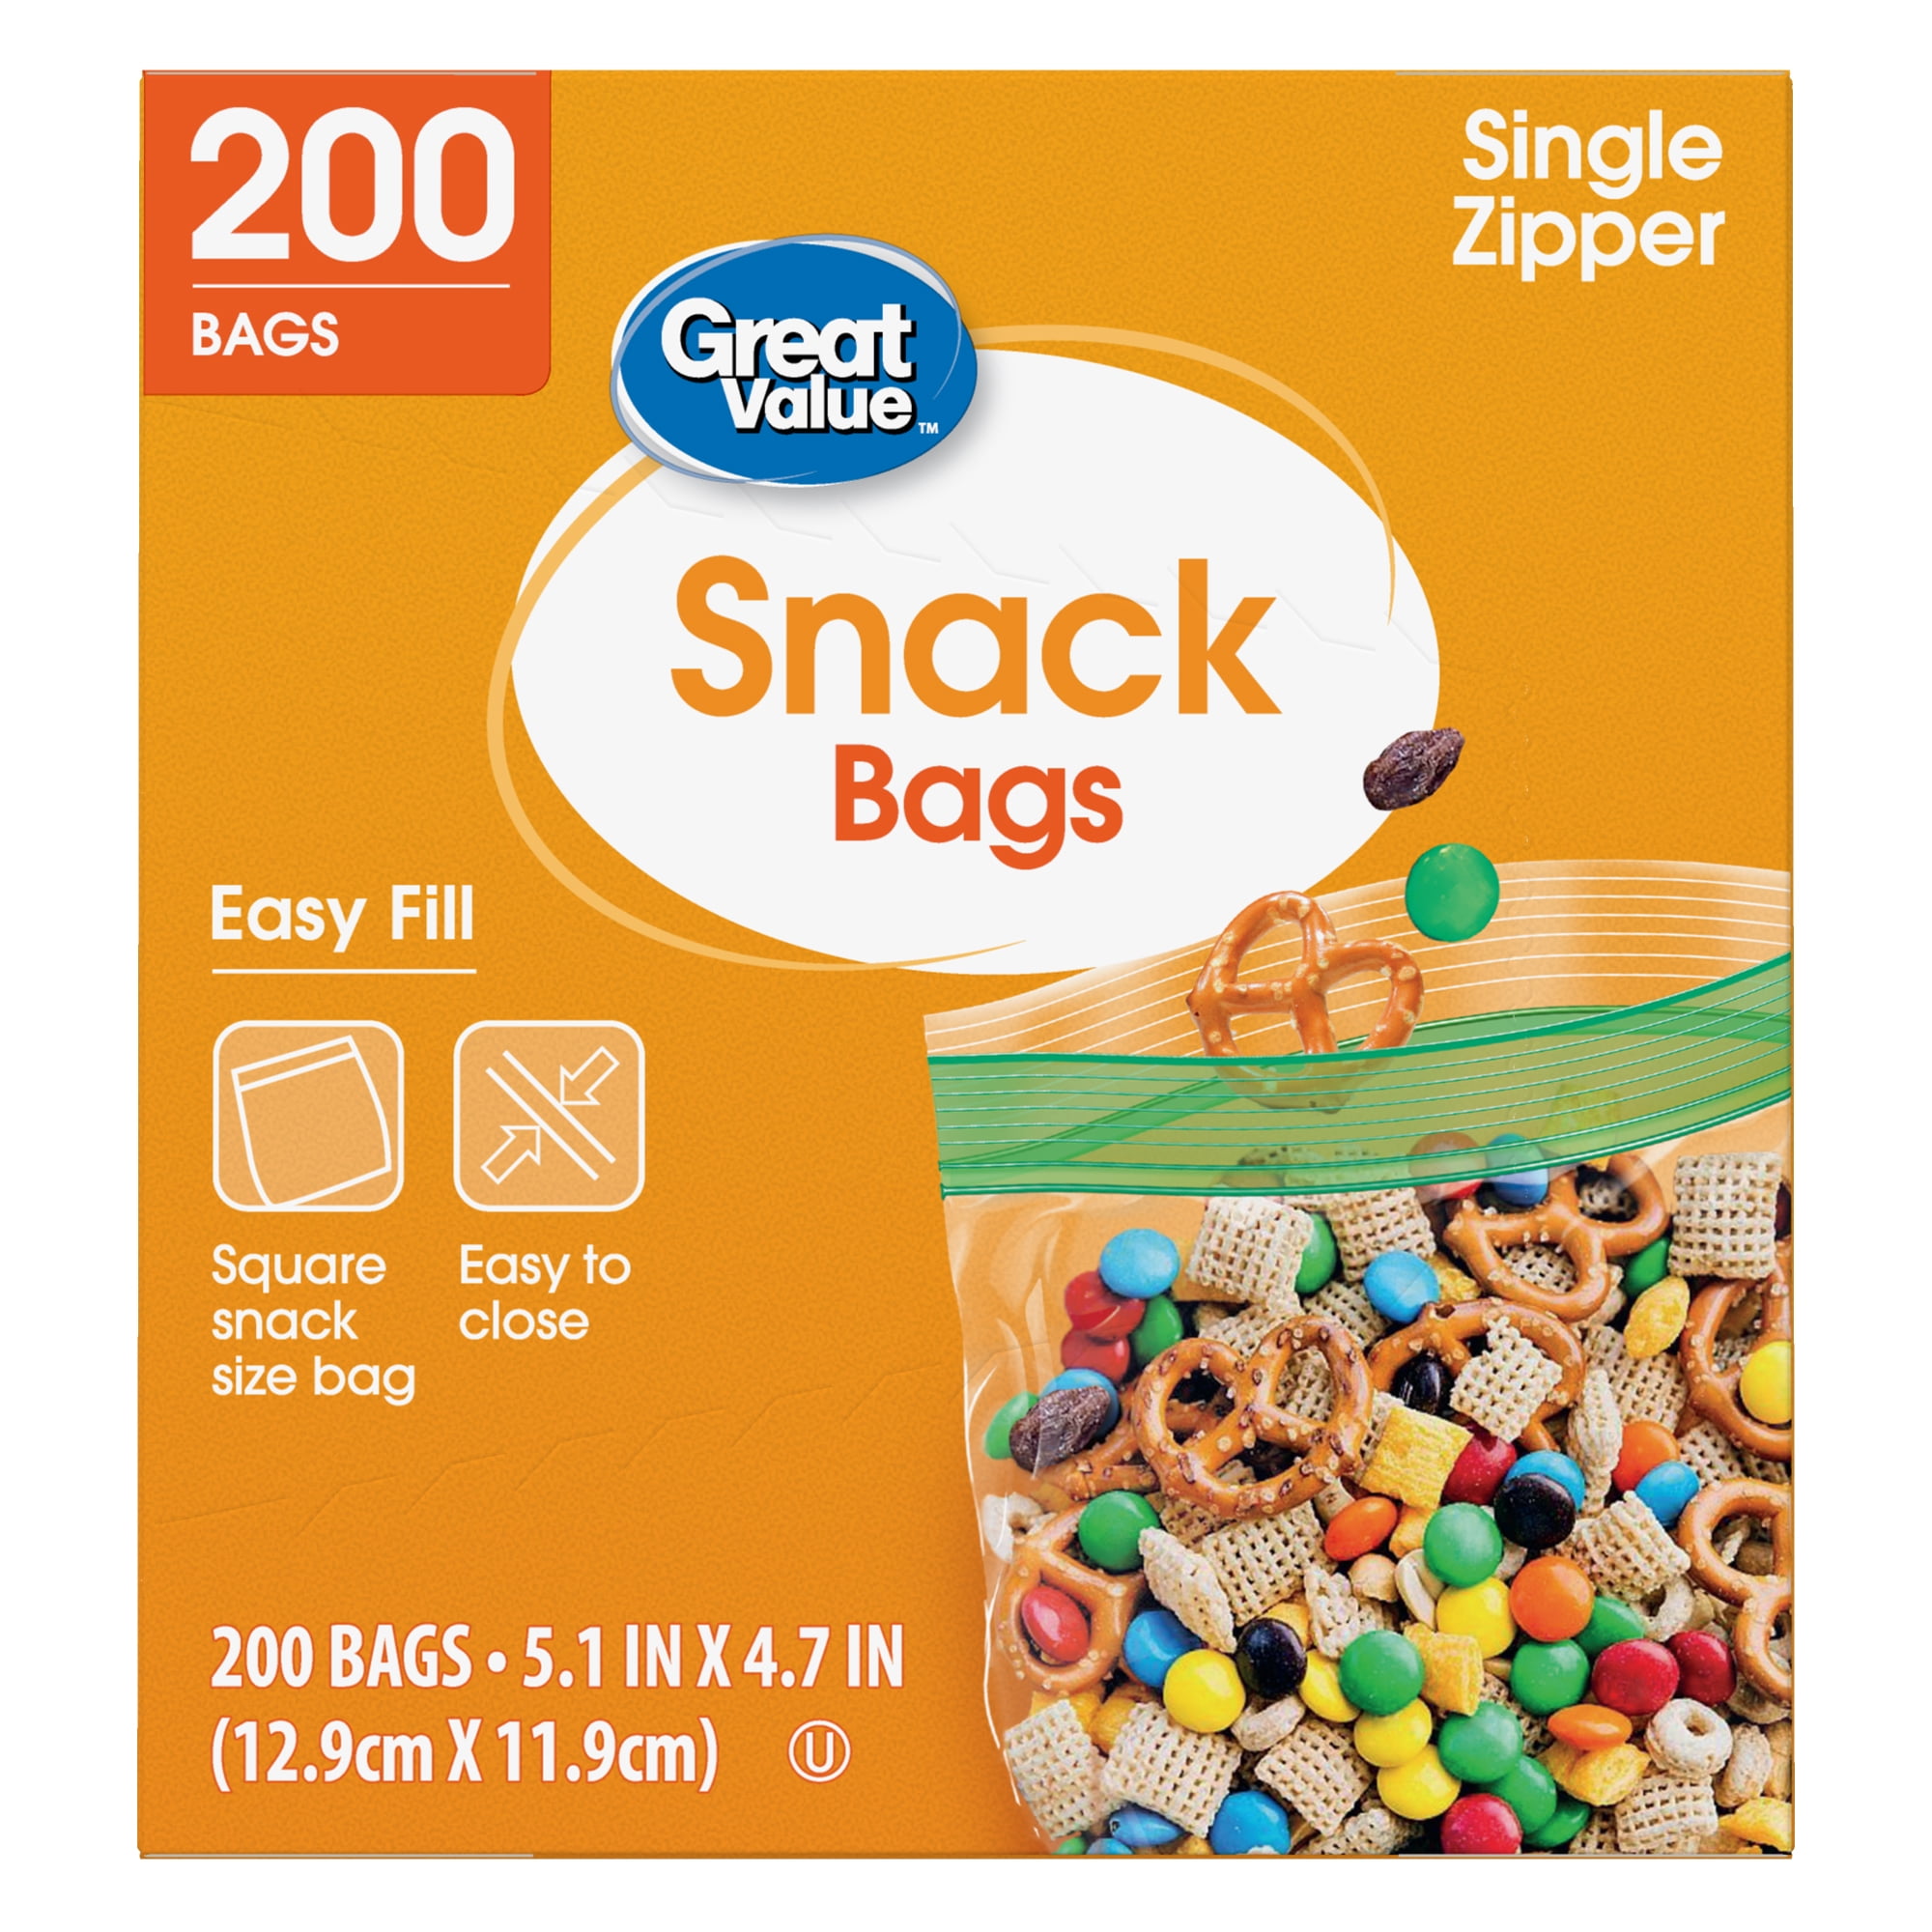 Snacks in Sacks - Snack Bag 101: want to make snack bags